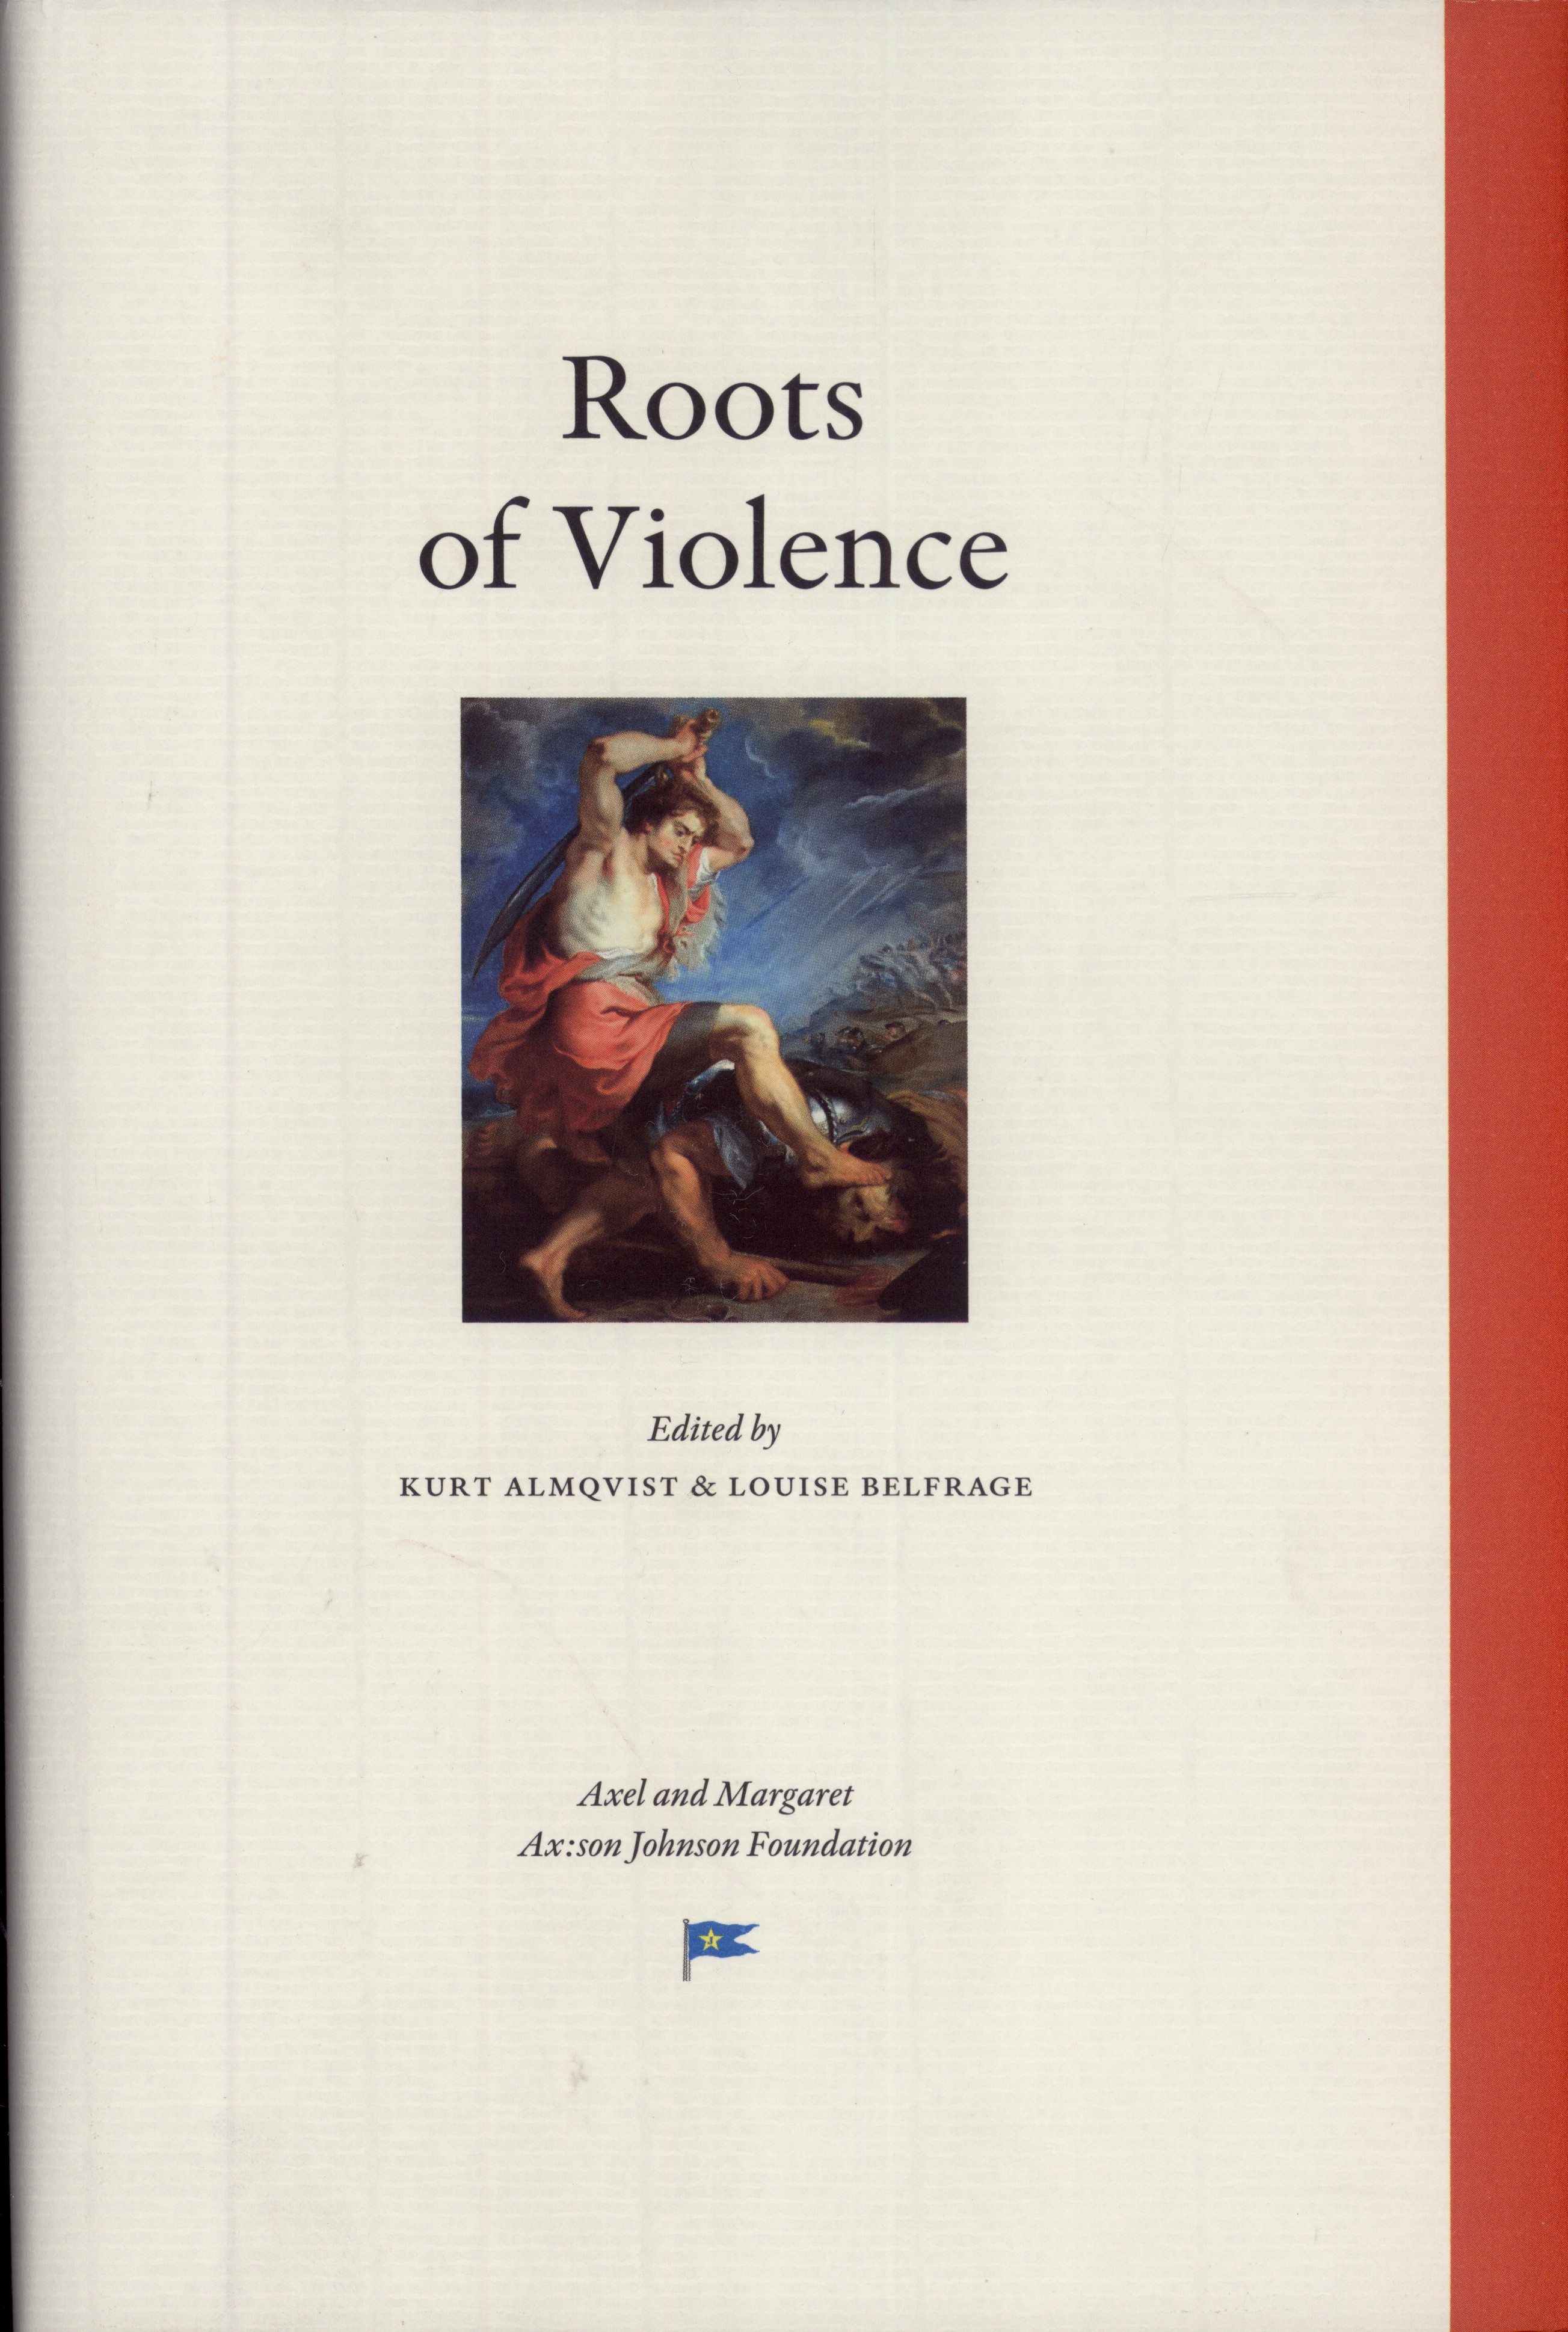 Roots of Violence - Kurt Almqvist & Louise Belfrage (editors)